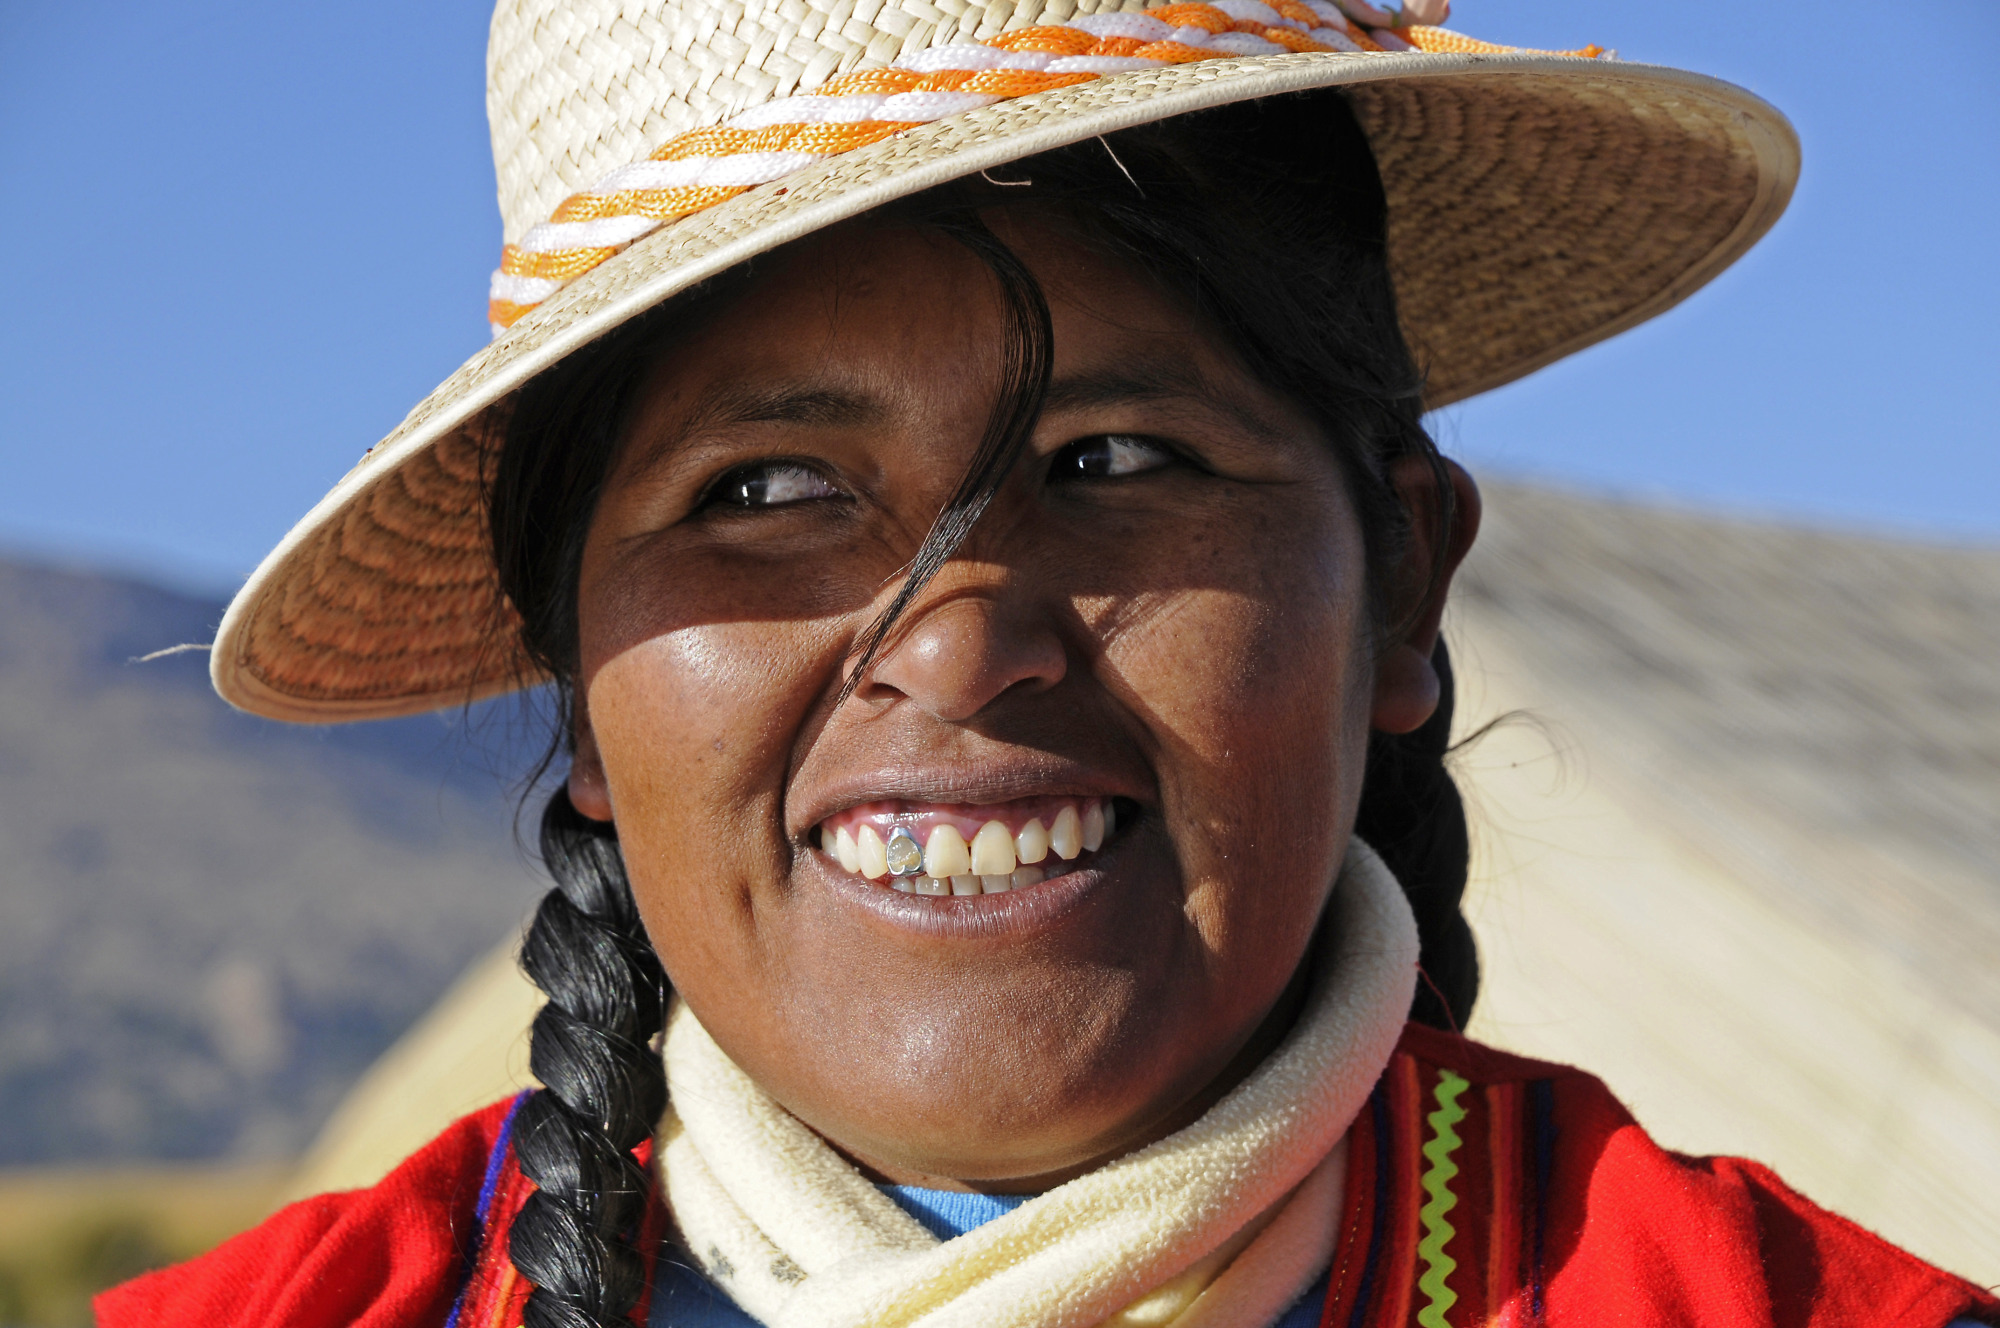 Древнее племя 6 букв. Индейцы озера Титикака Уру. Уру народ индейский народ. Племя Уру Титикака. Уру народы Перу.